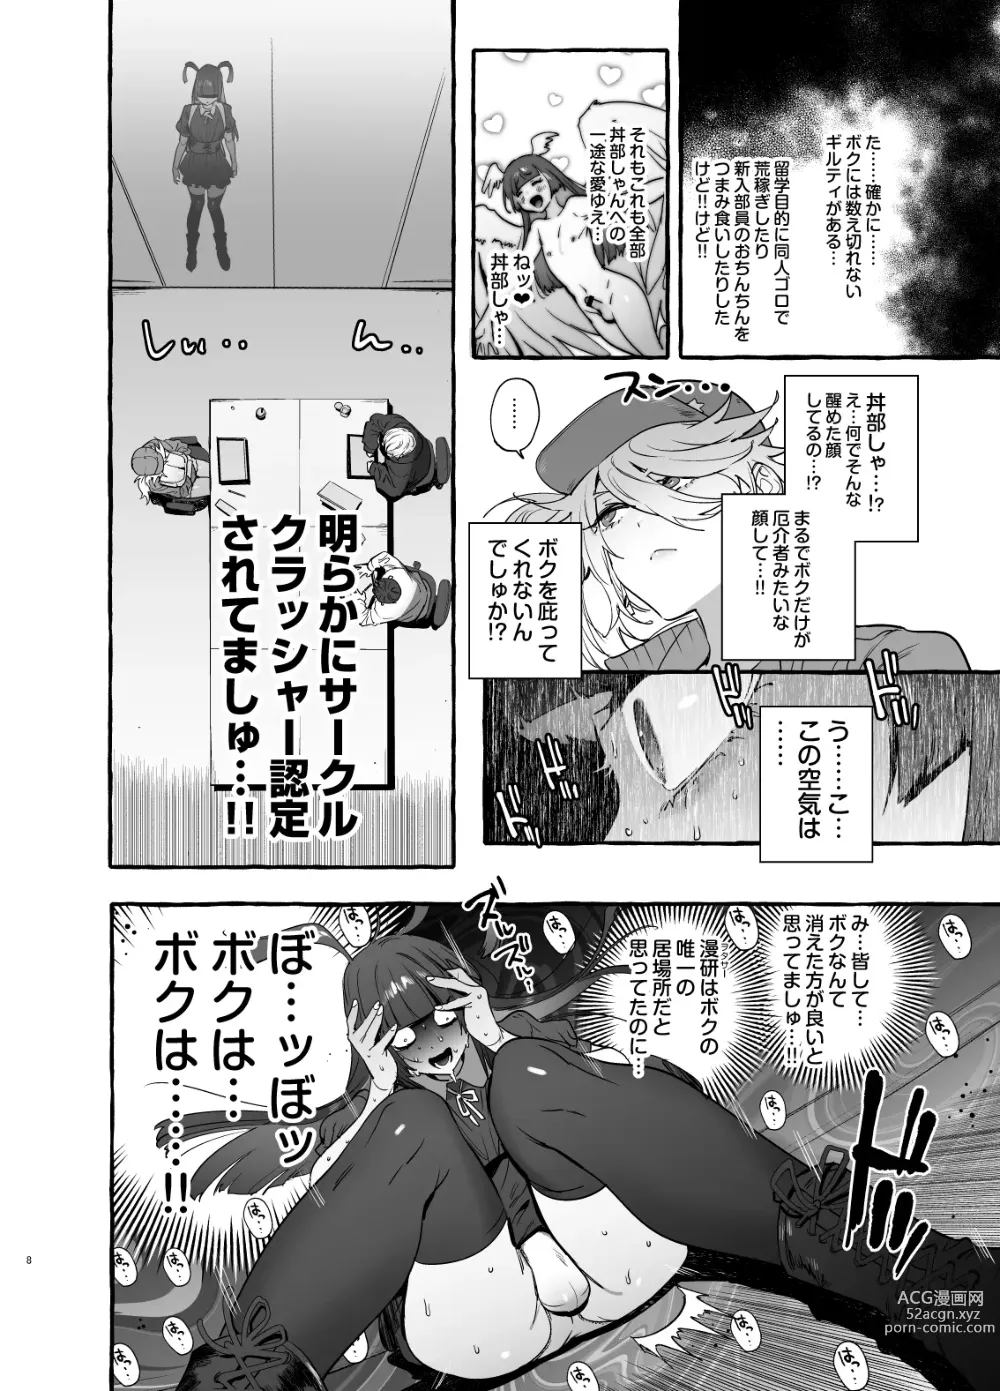 Page 10 of doujinshi Wotasa no Gyaru VS Jirai Otoko